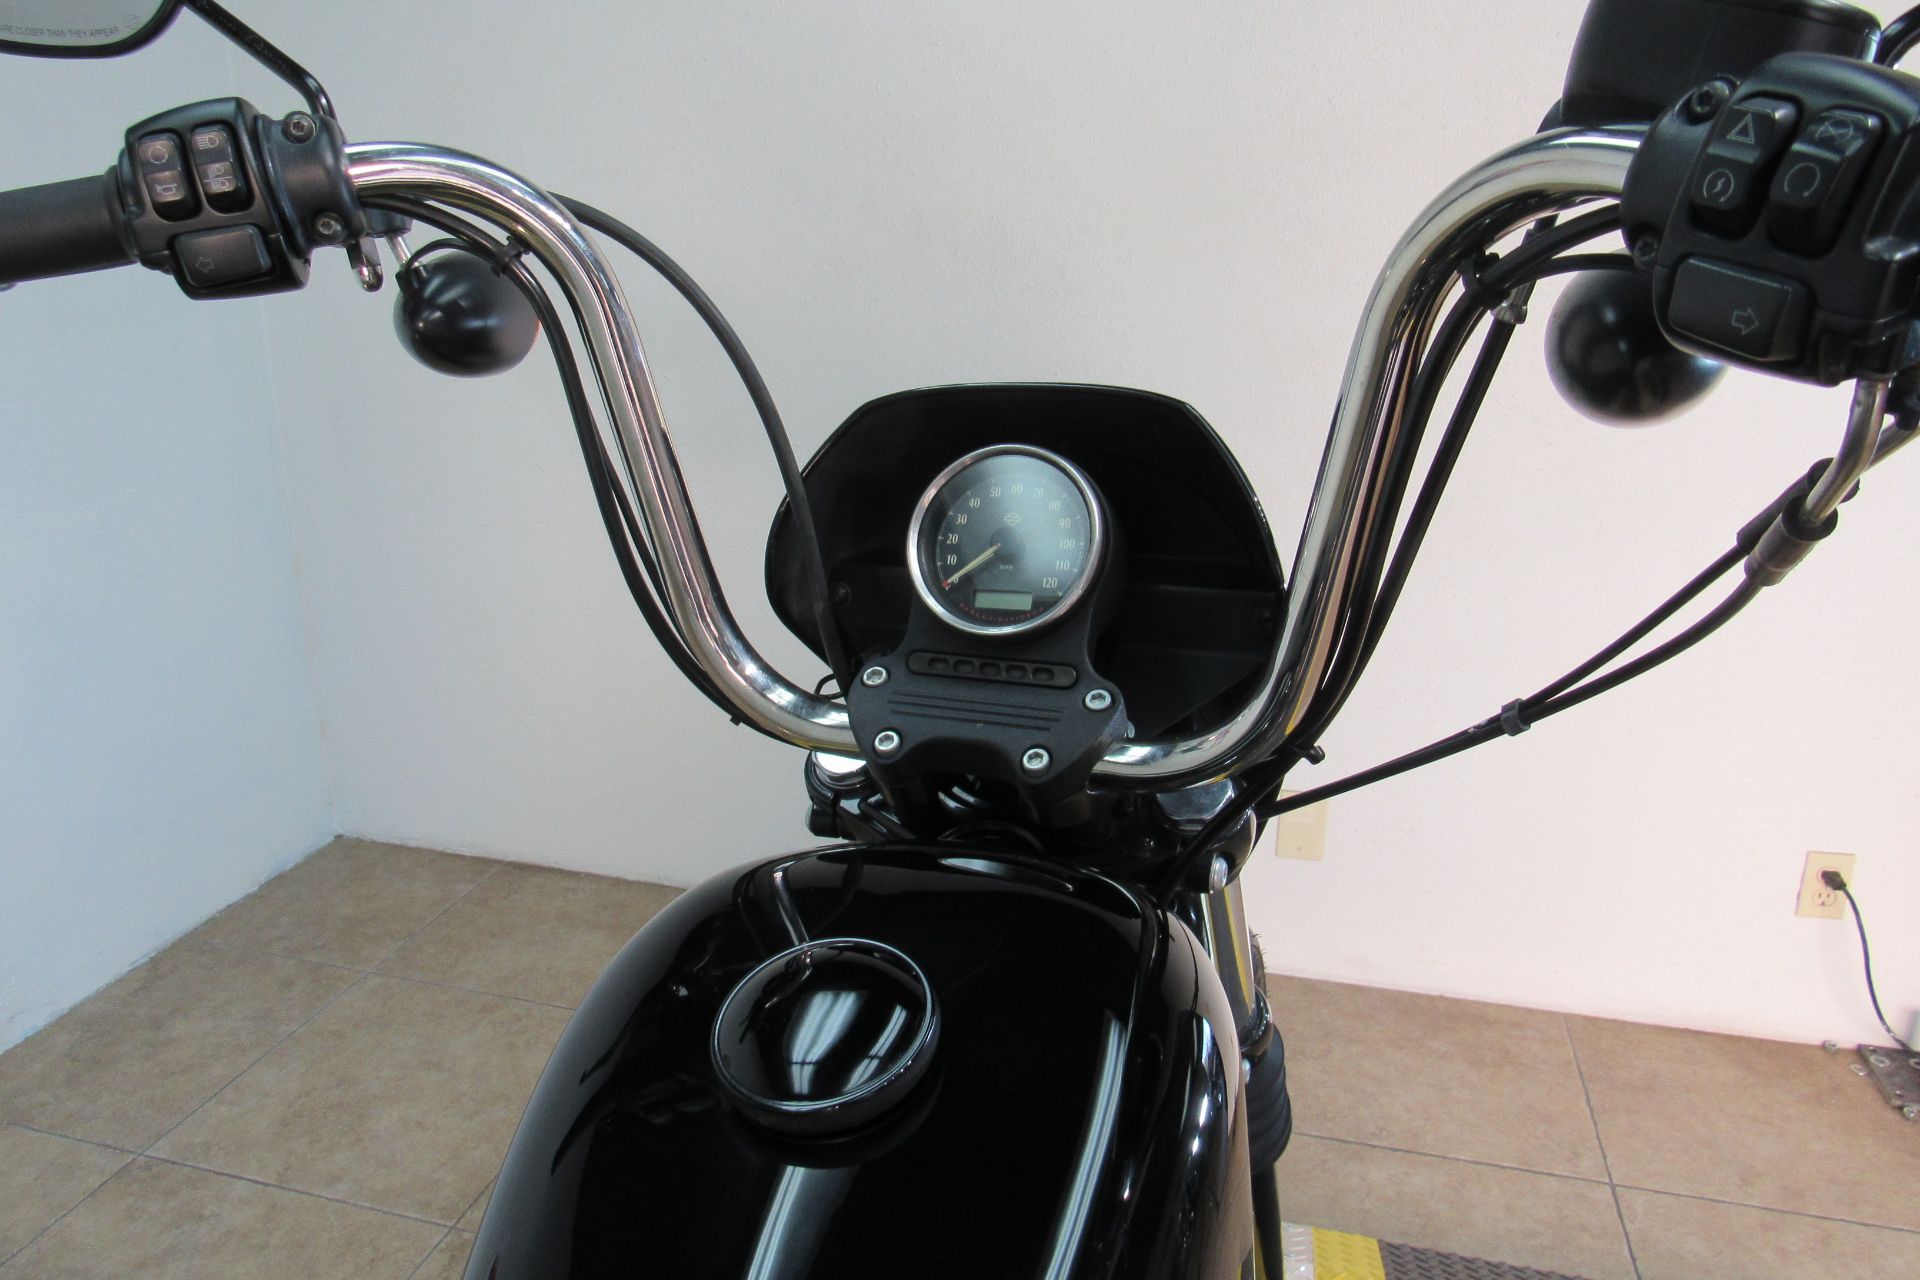 2020 Harley-Davidson Iron 1200™ in Temecula, California - Photo 27